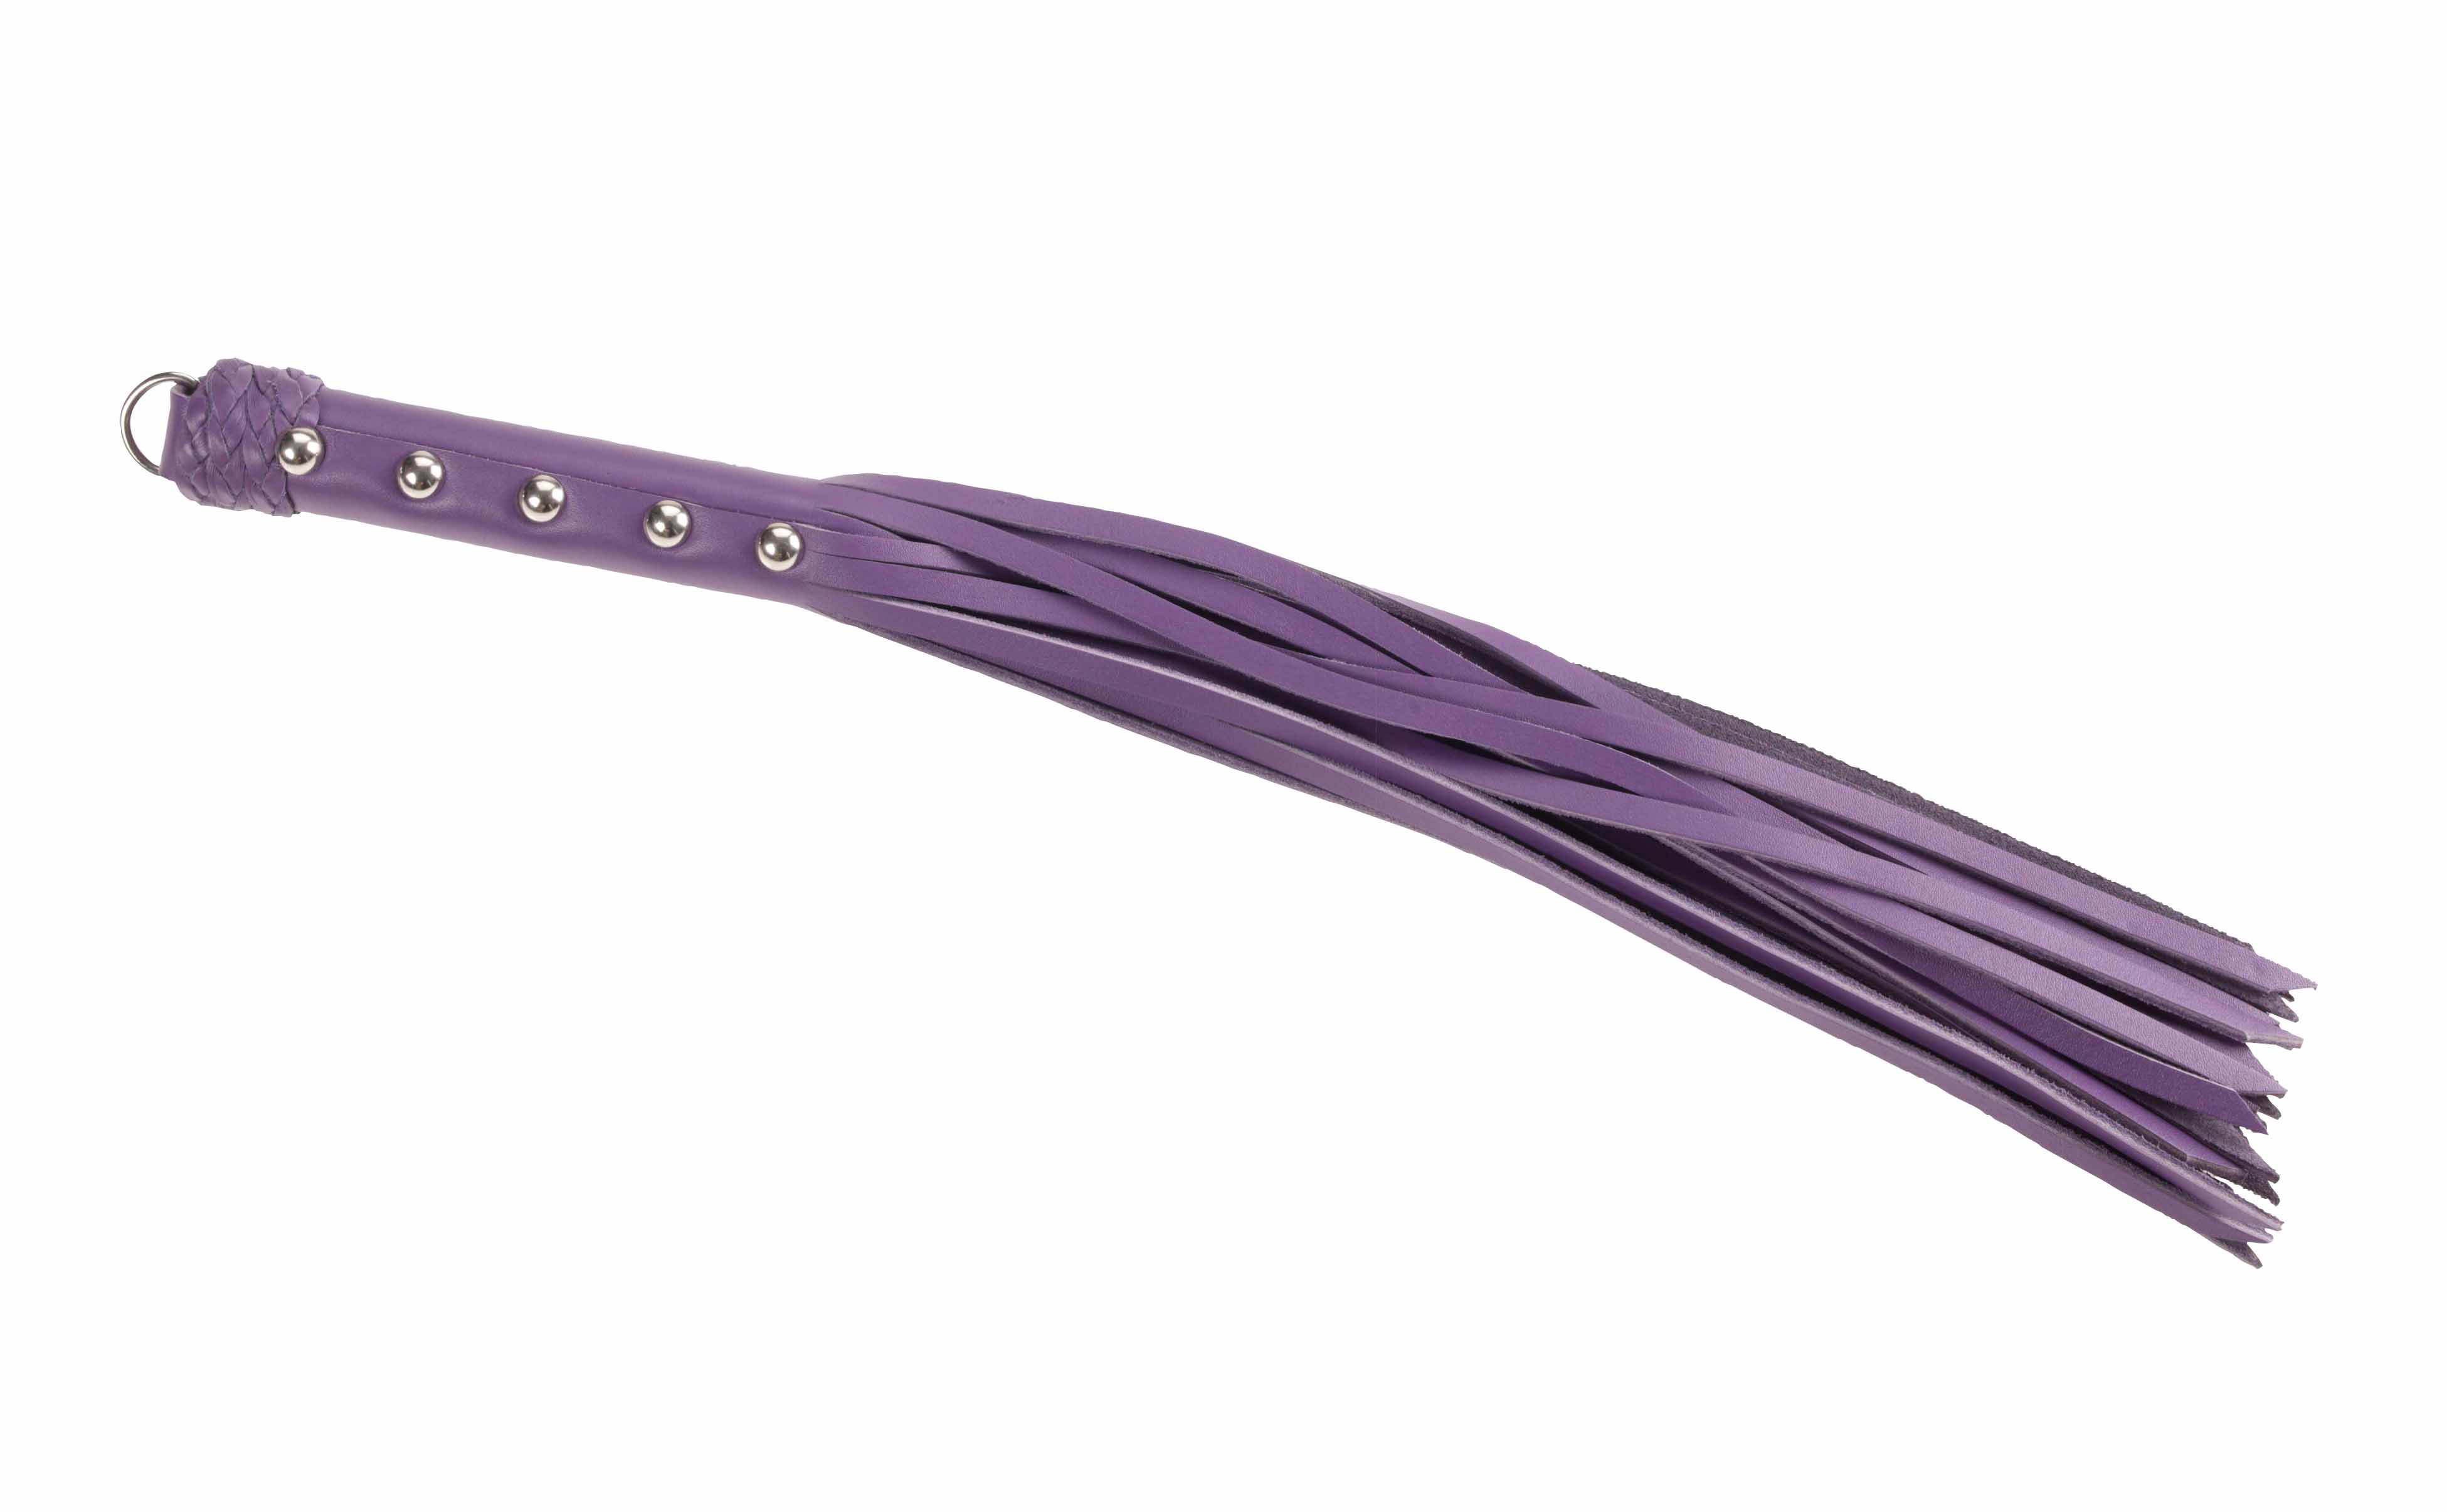 20" Strap Whip Purple - SPL10CP